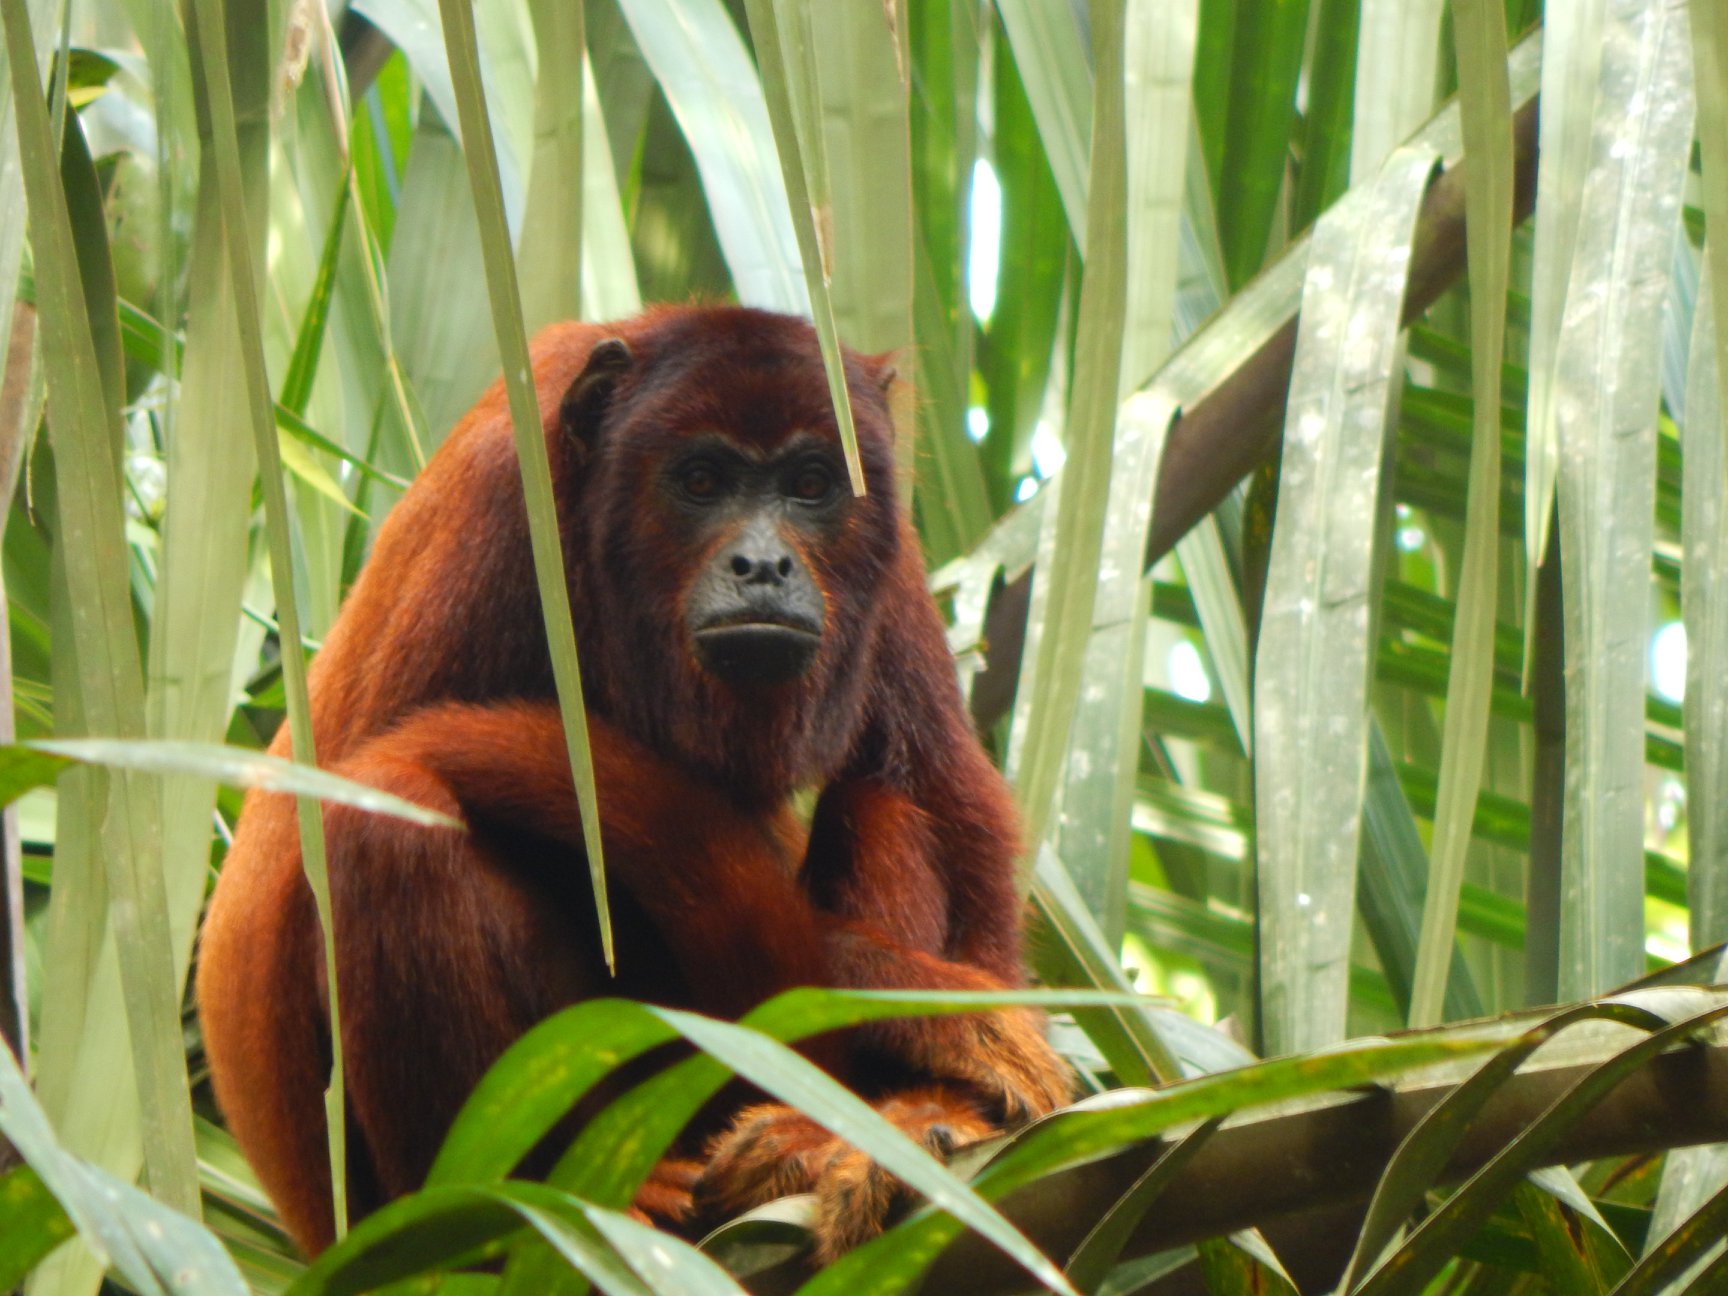 Tambopata – an internationally recognised biodiversity hotspot